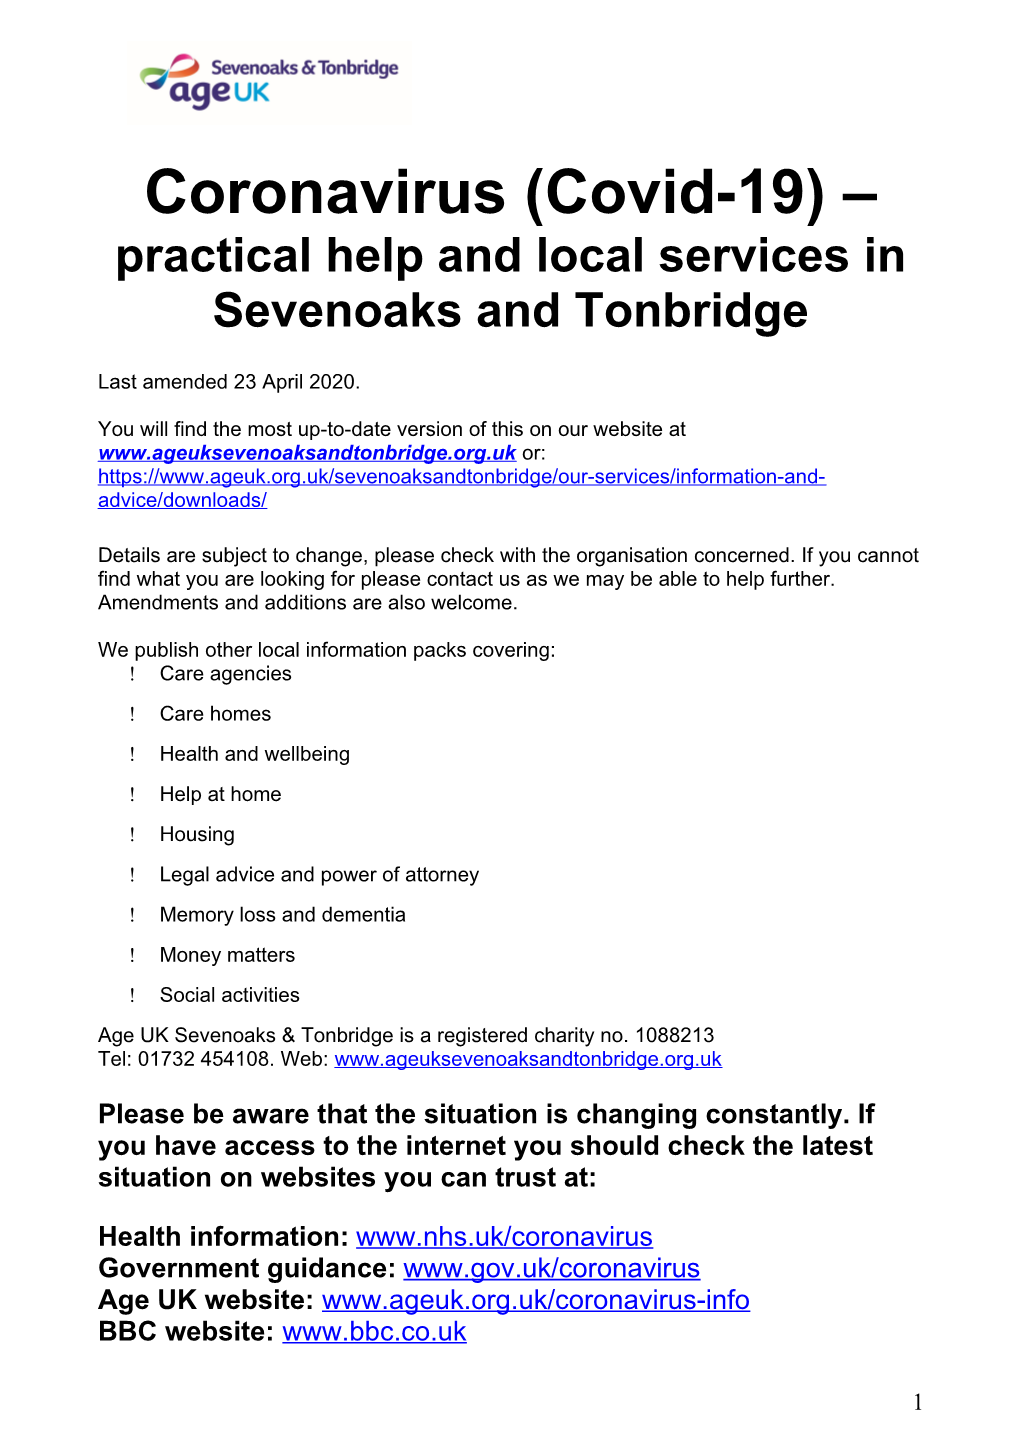 Coronavirus (Covid-19) – Practical Help and Local Services in Sevenoaks and Tonbridge